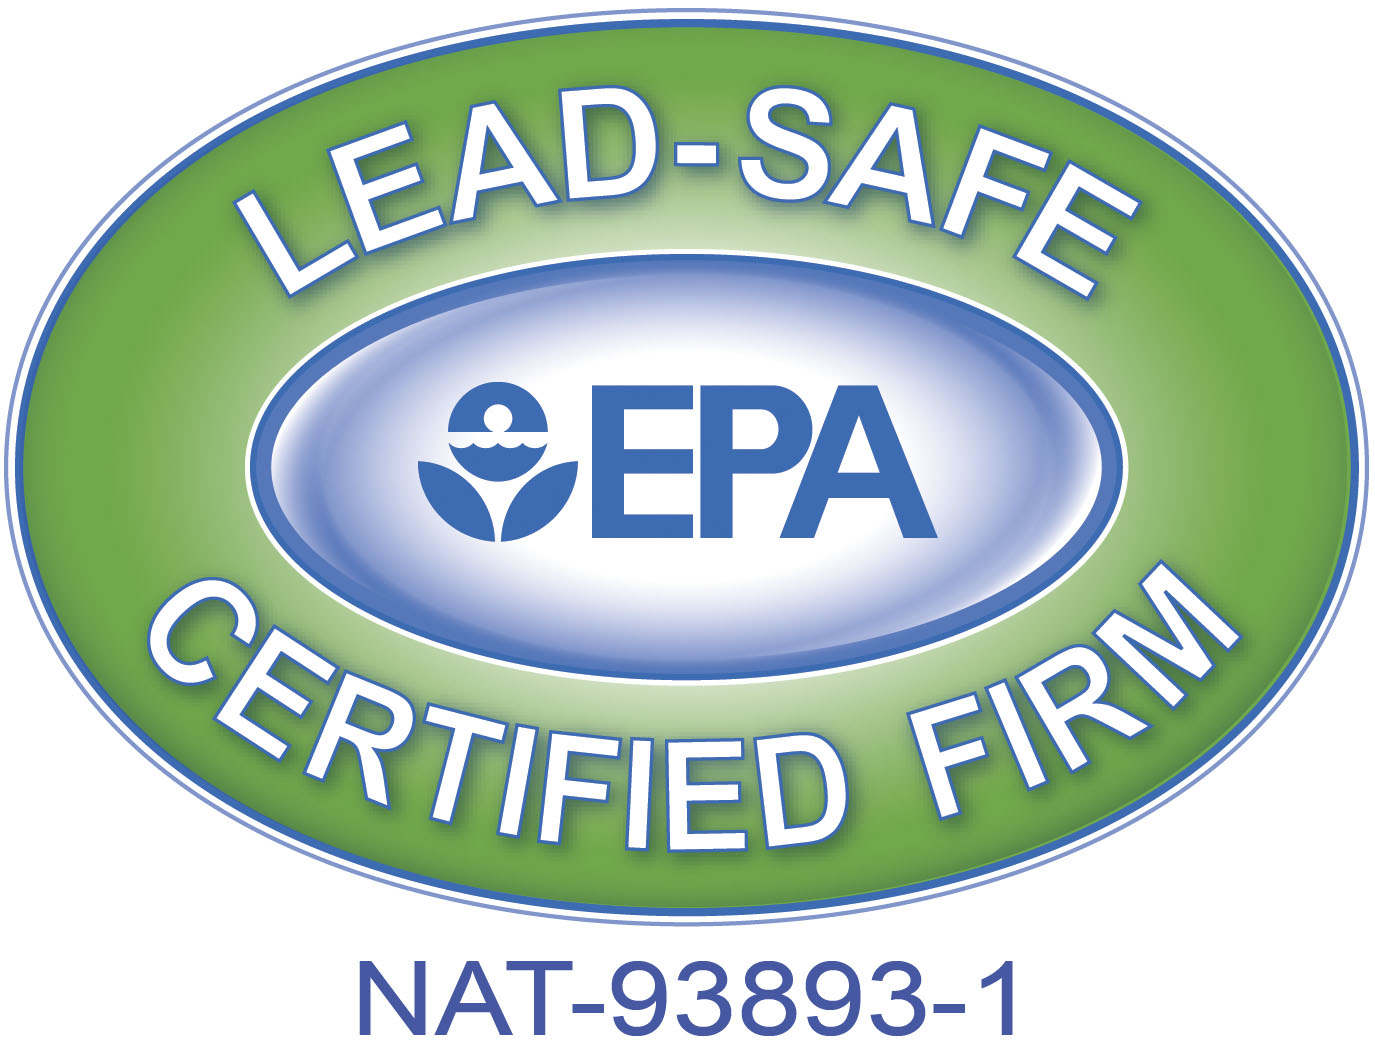 Alliance Garage Doors & Openers, LLC is a certified lead-safe firm